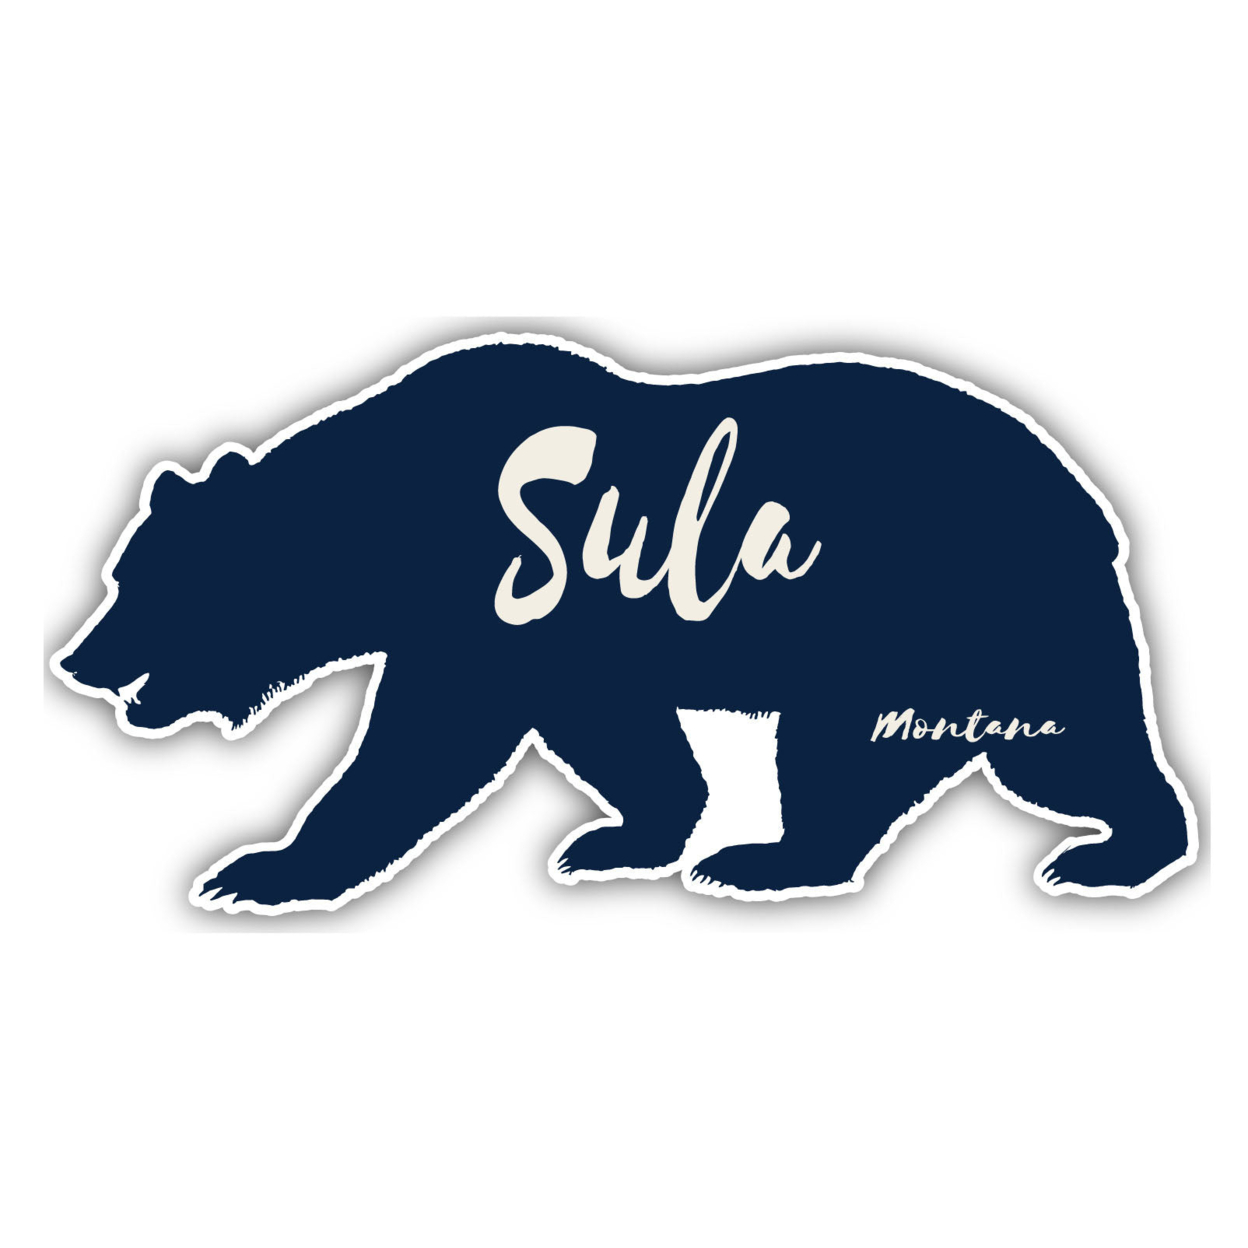 Sula Montana Souvenir Decorative Stickers (Choose Theme And Size) - Single Unit, 2-Inch, Bear